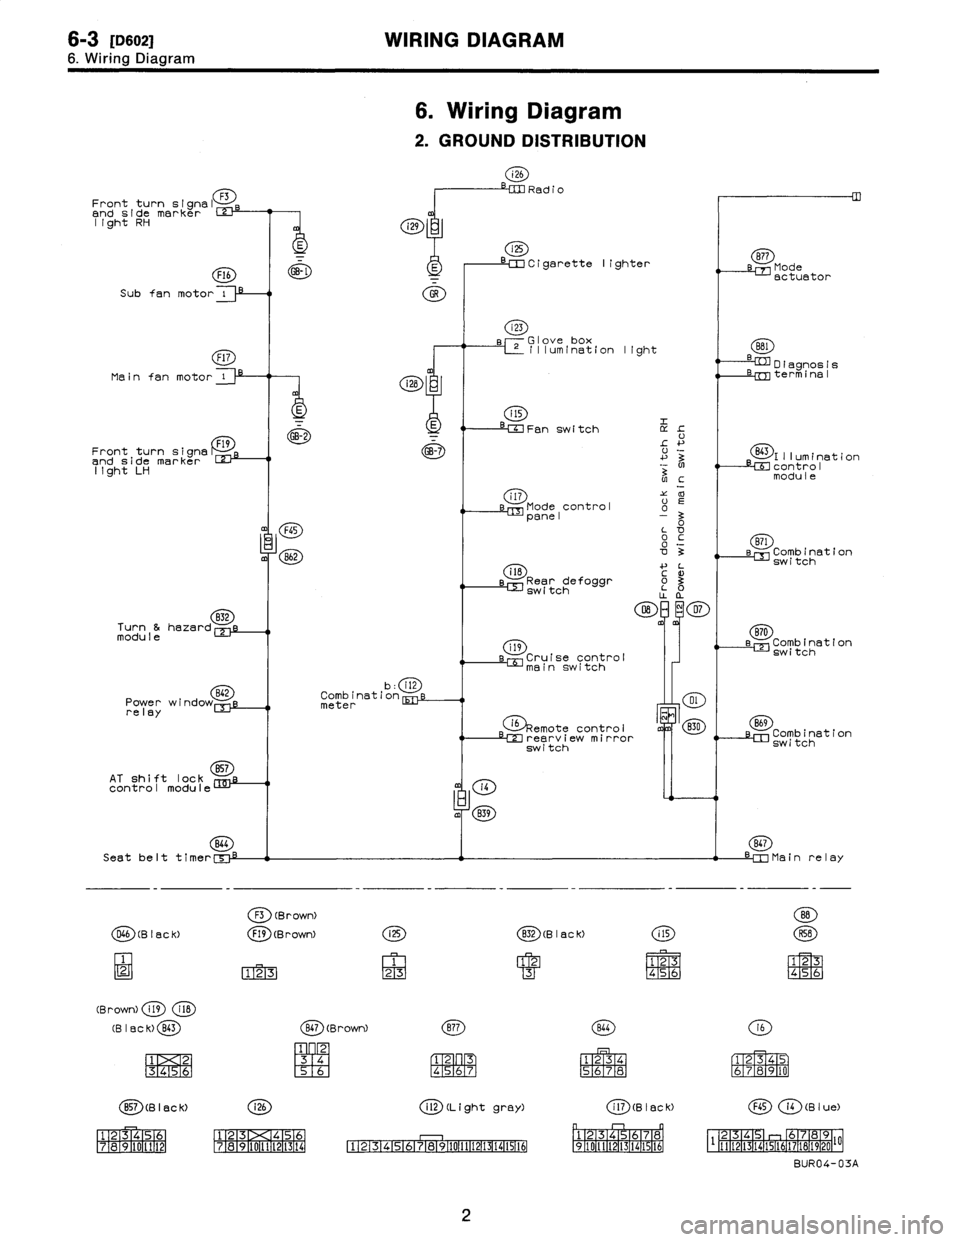 SUBARU LEGACY 1996  Service Repair Manual 6-3
IDso21
WIRING
DIAGRAM

6
.
Wiring
Diagram

6
.
Wiring
Diagram

2
.
GROUND
DISTRIBUTION

i26
Radio
Front
turn
signal
F3

and
sidemarker
z
light
RH

Cigarette
lighter
8~7
Mode
Flb
~
actuator

Subfan